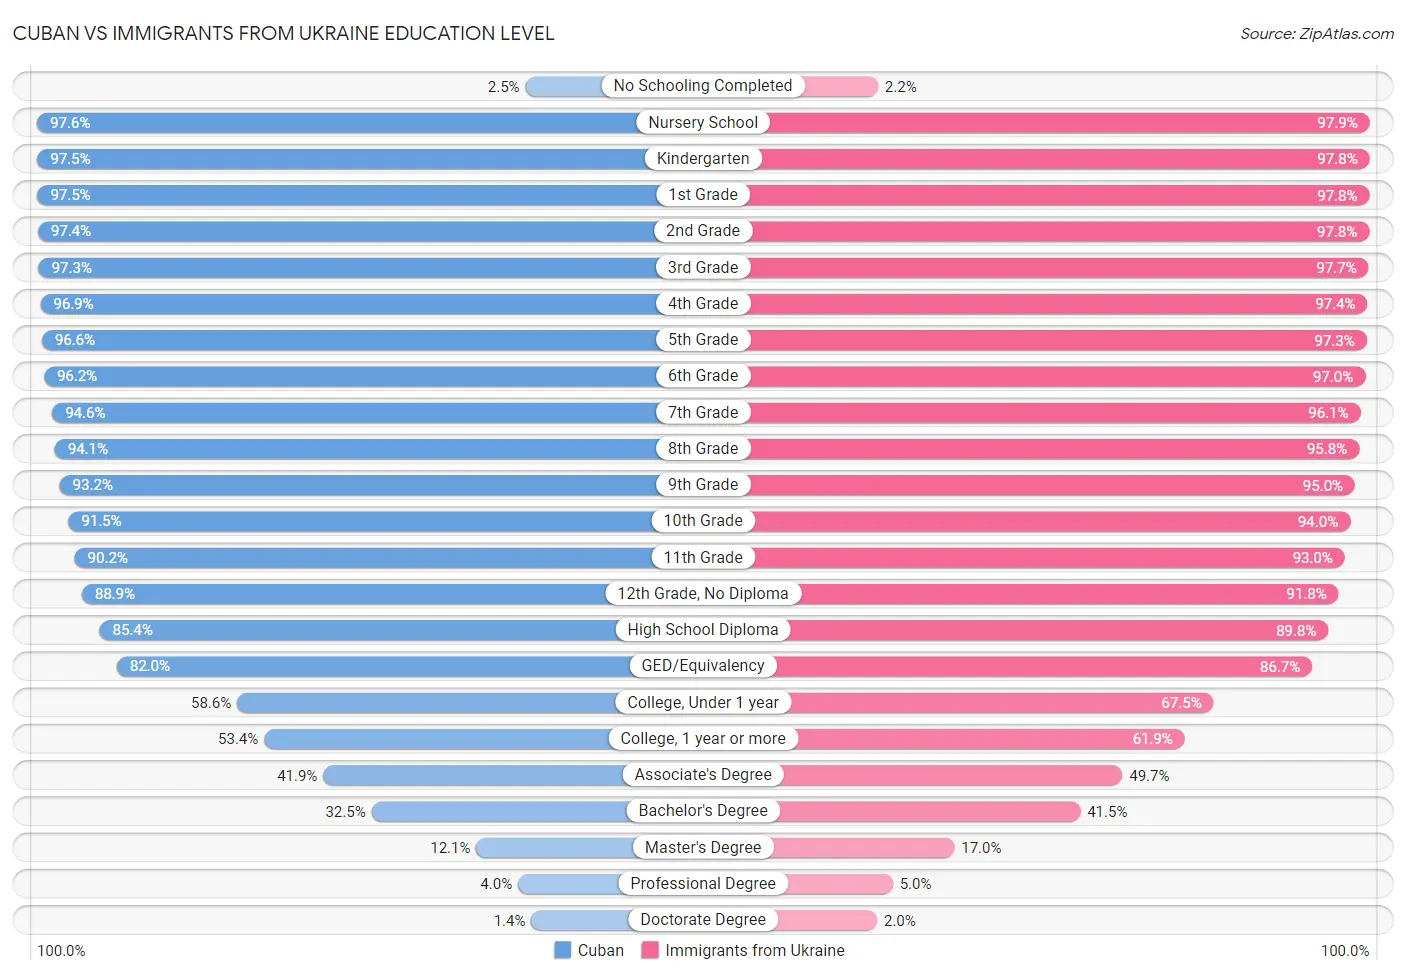 Cuban vs Immigrants from Ukraine Education Level